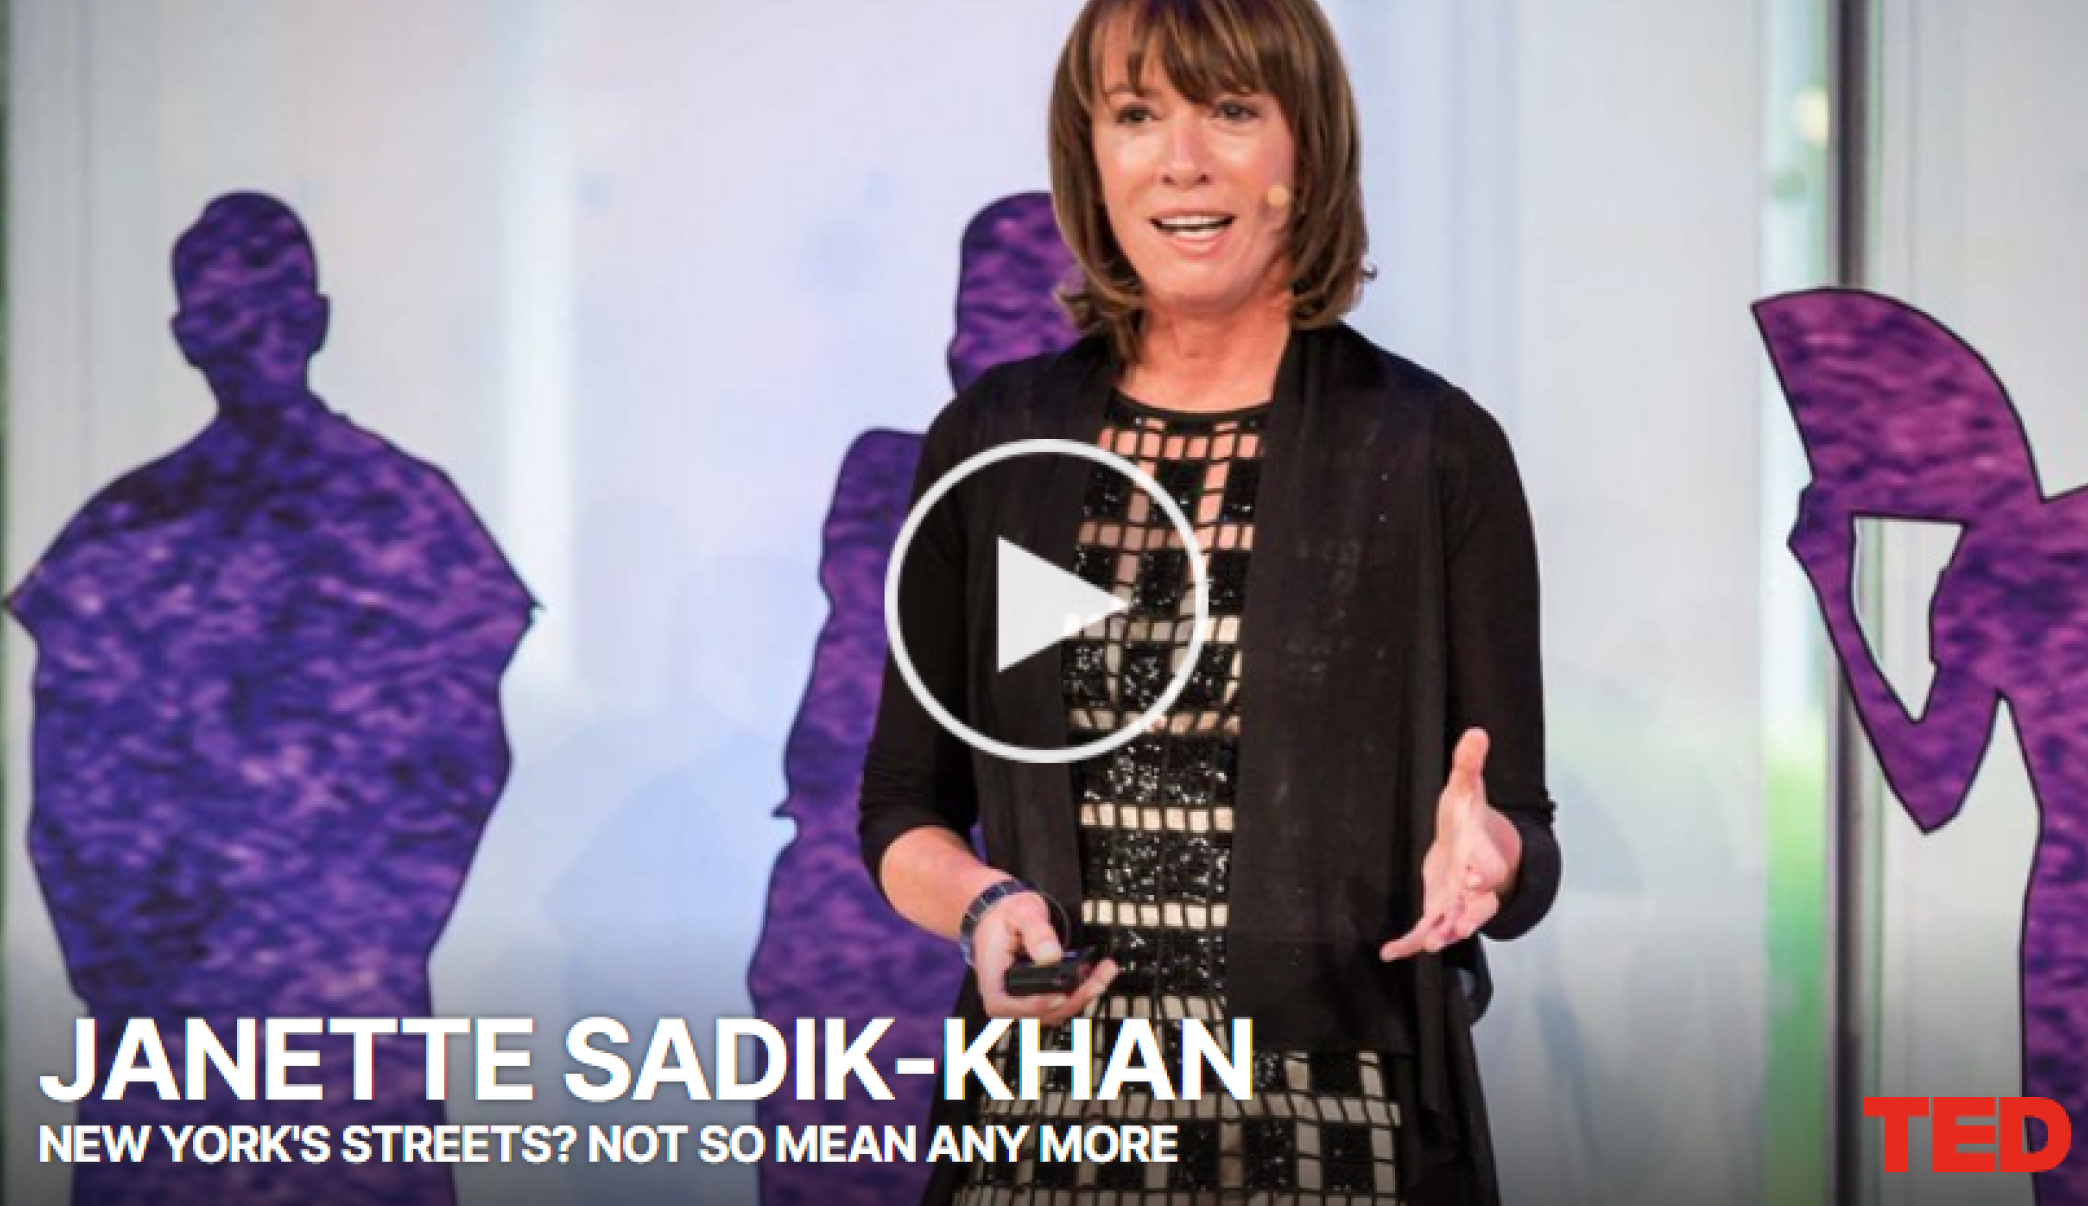 Cover shot of Janette Sadik-Khan's TED talk